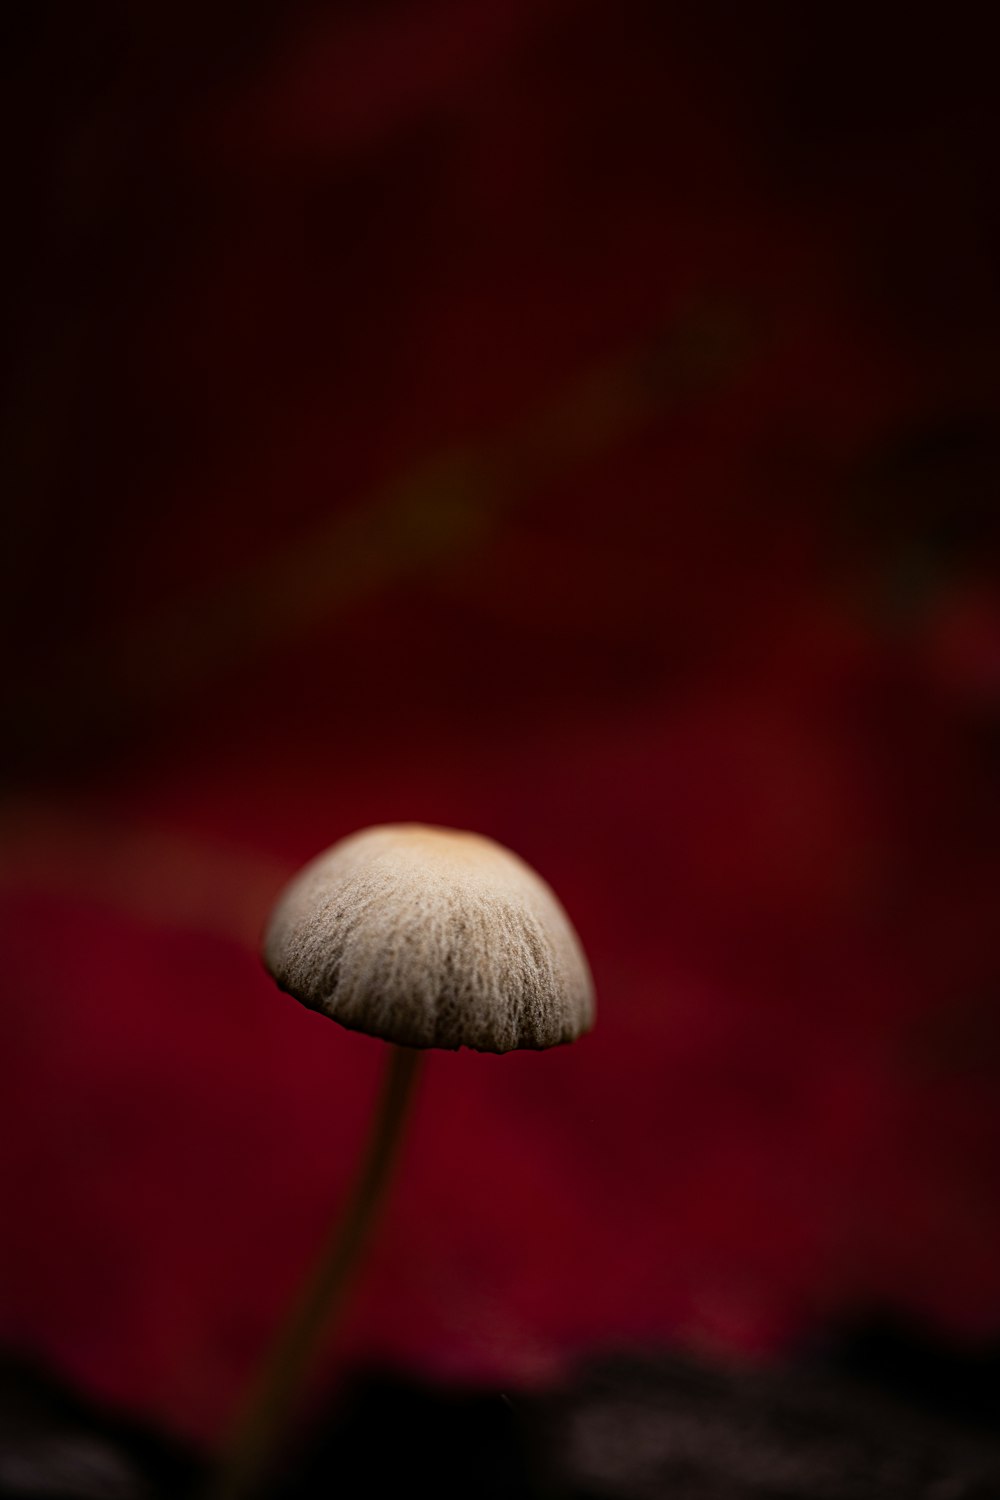 a single white mushroom